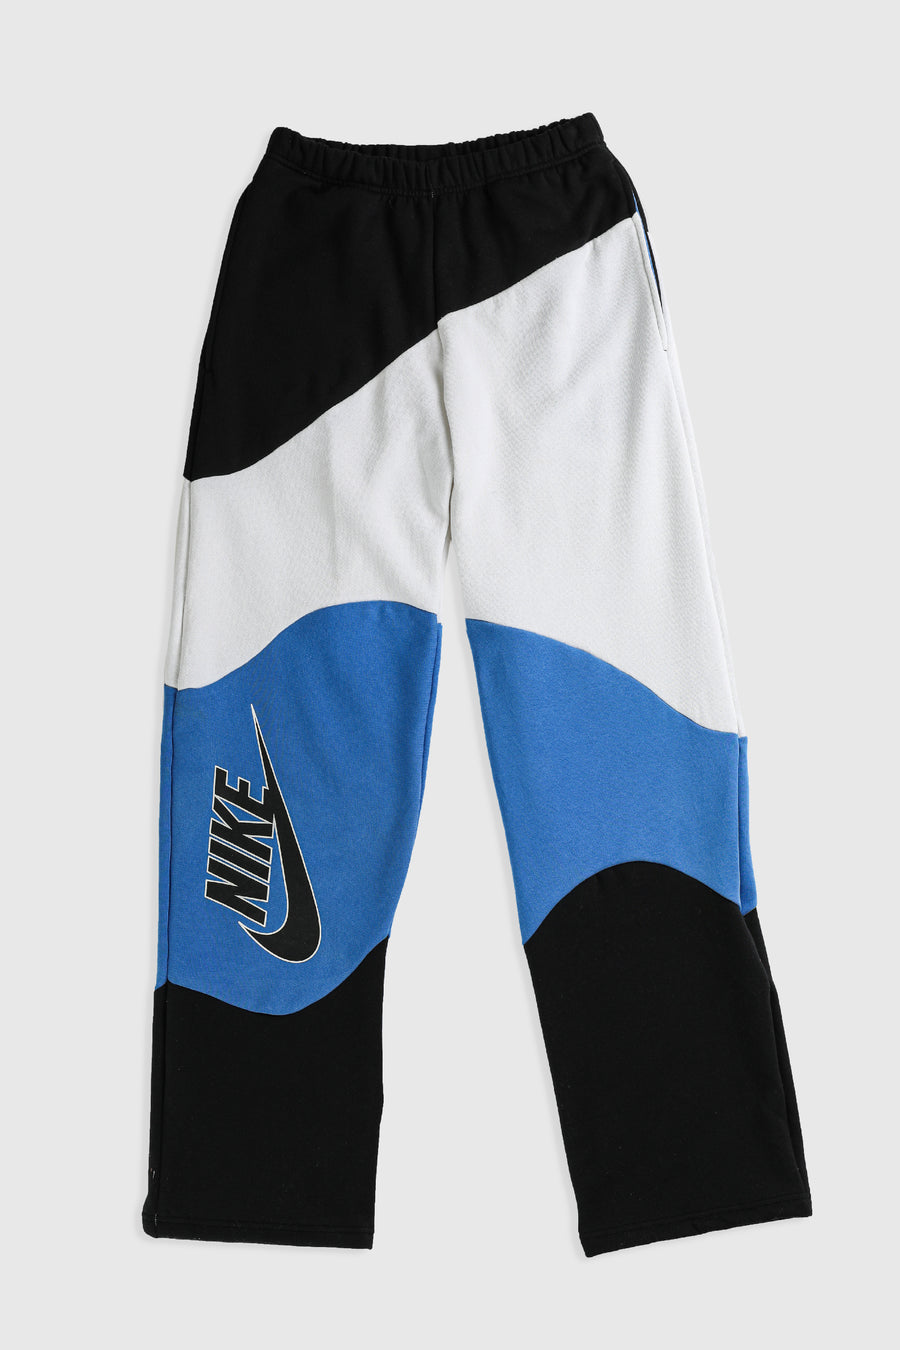 Rework Nike Wave Sweatpants - M